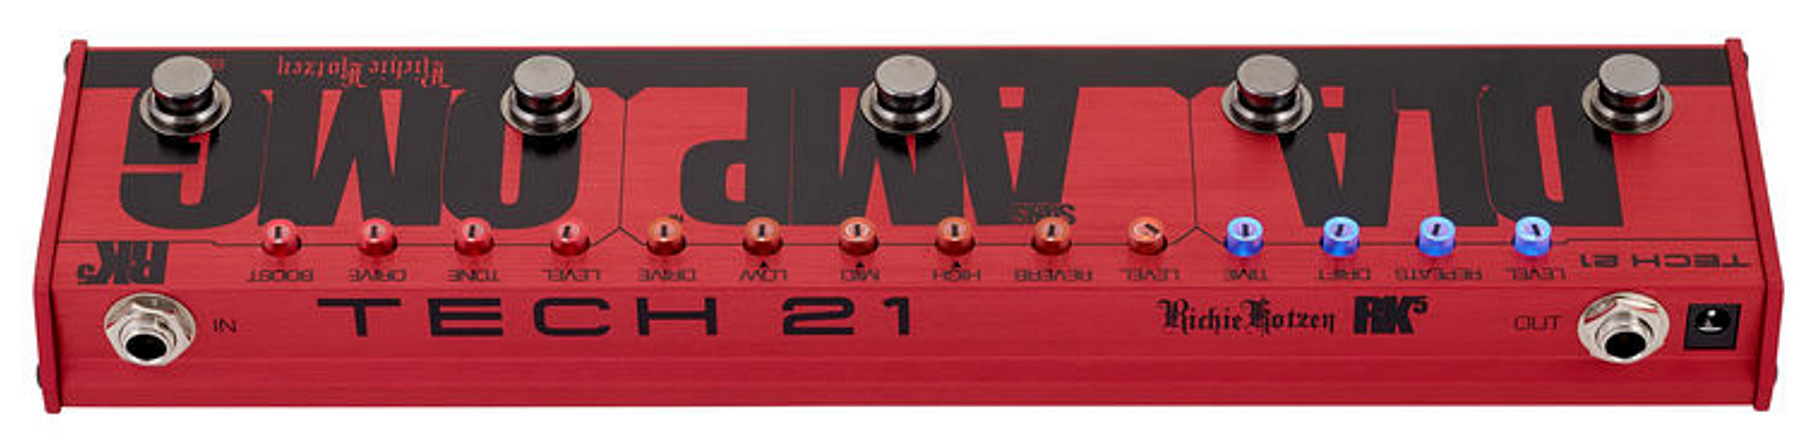 Tech 21 Richie Kotzen Signature Rk5 Fly Rig - Multieffect for electric guitar - Variation 4